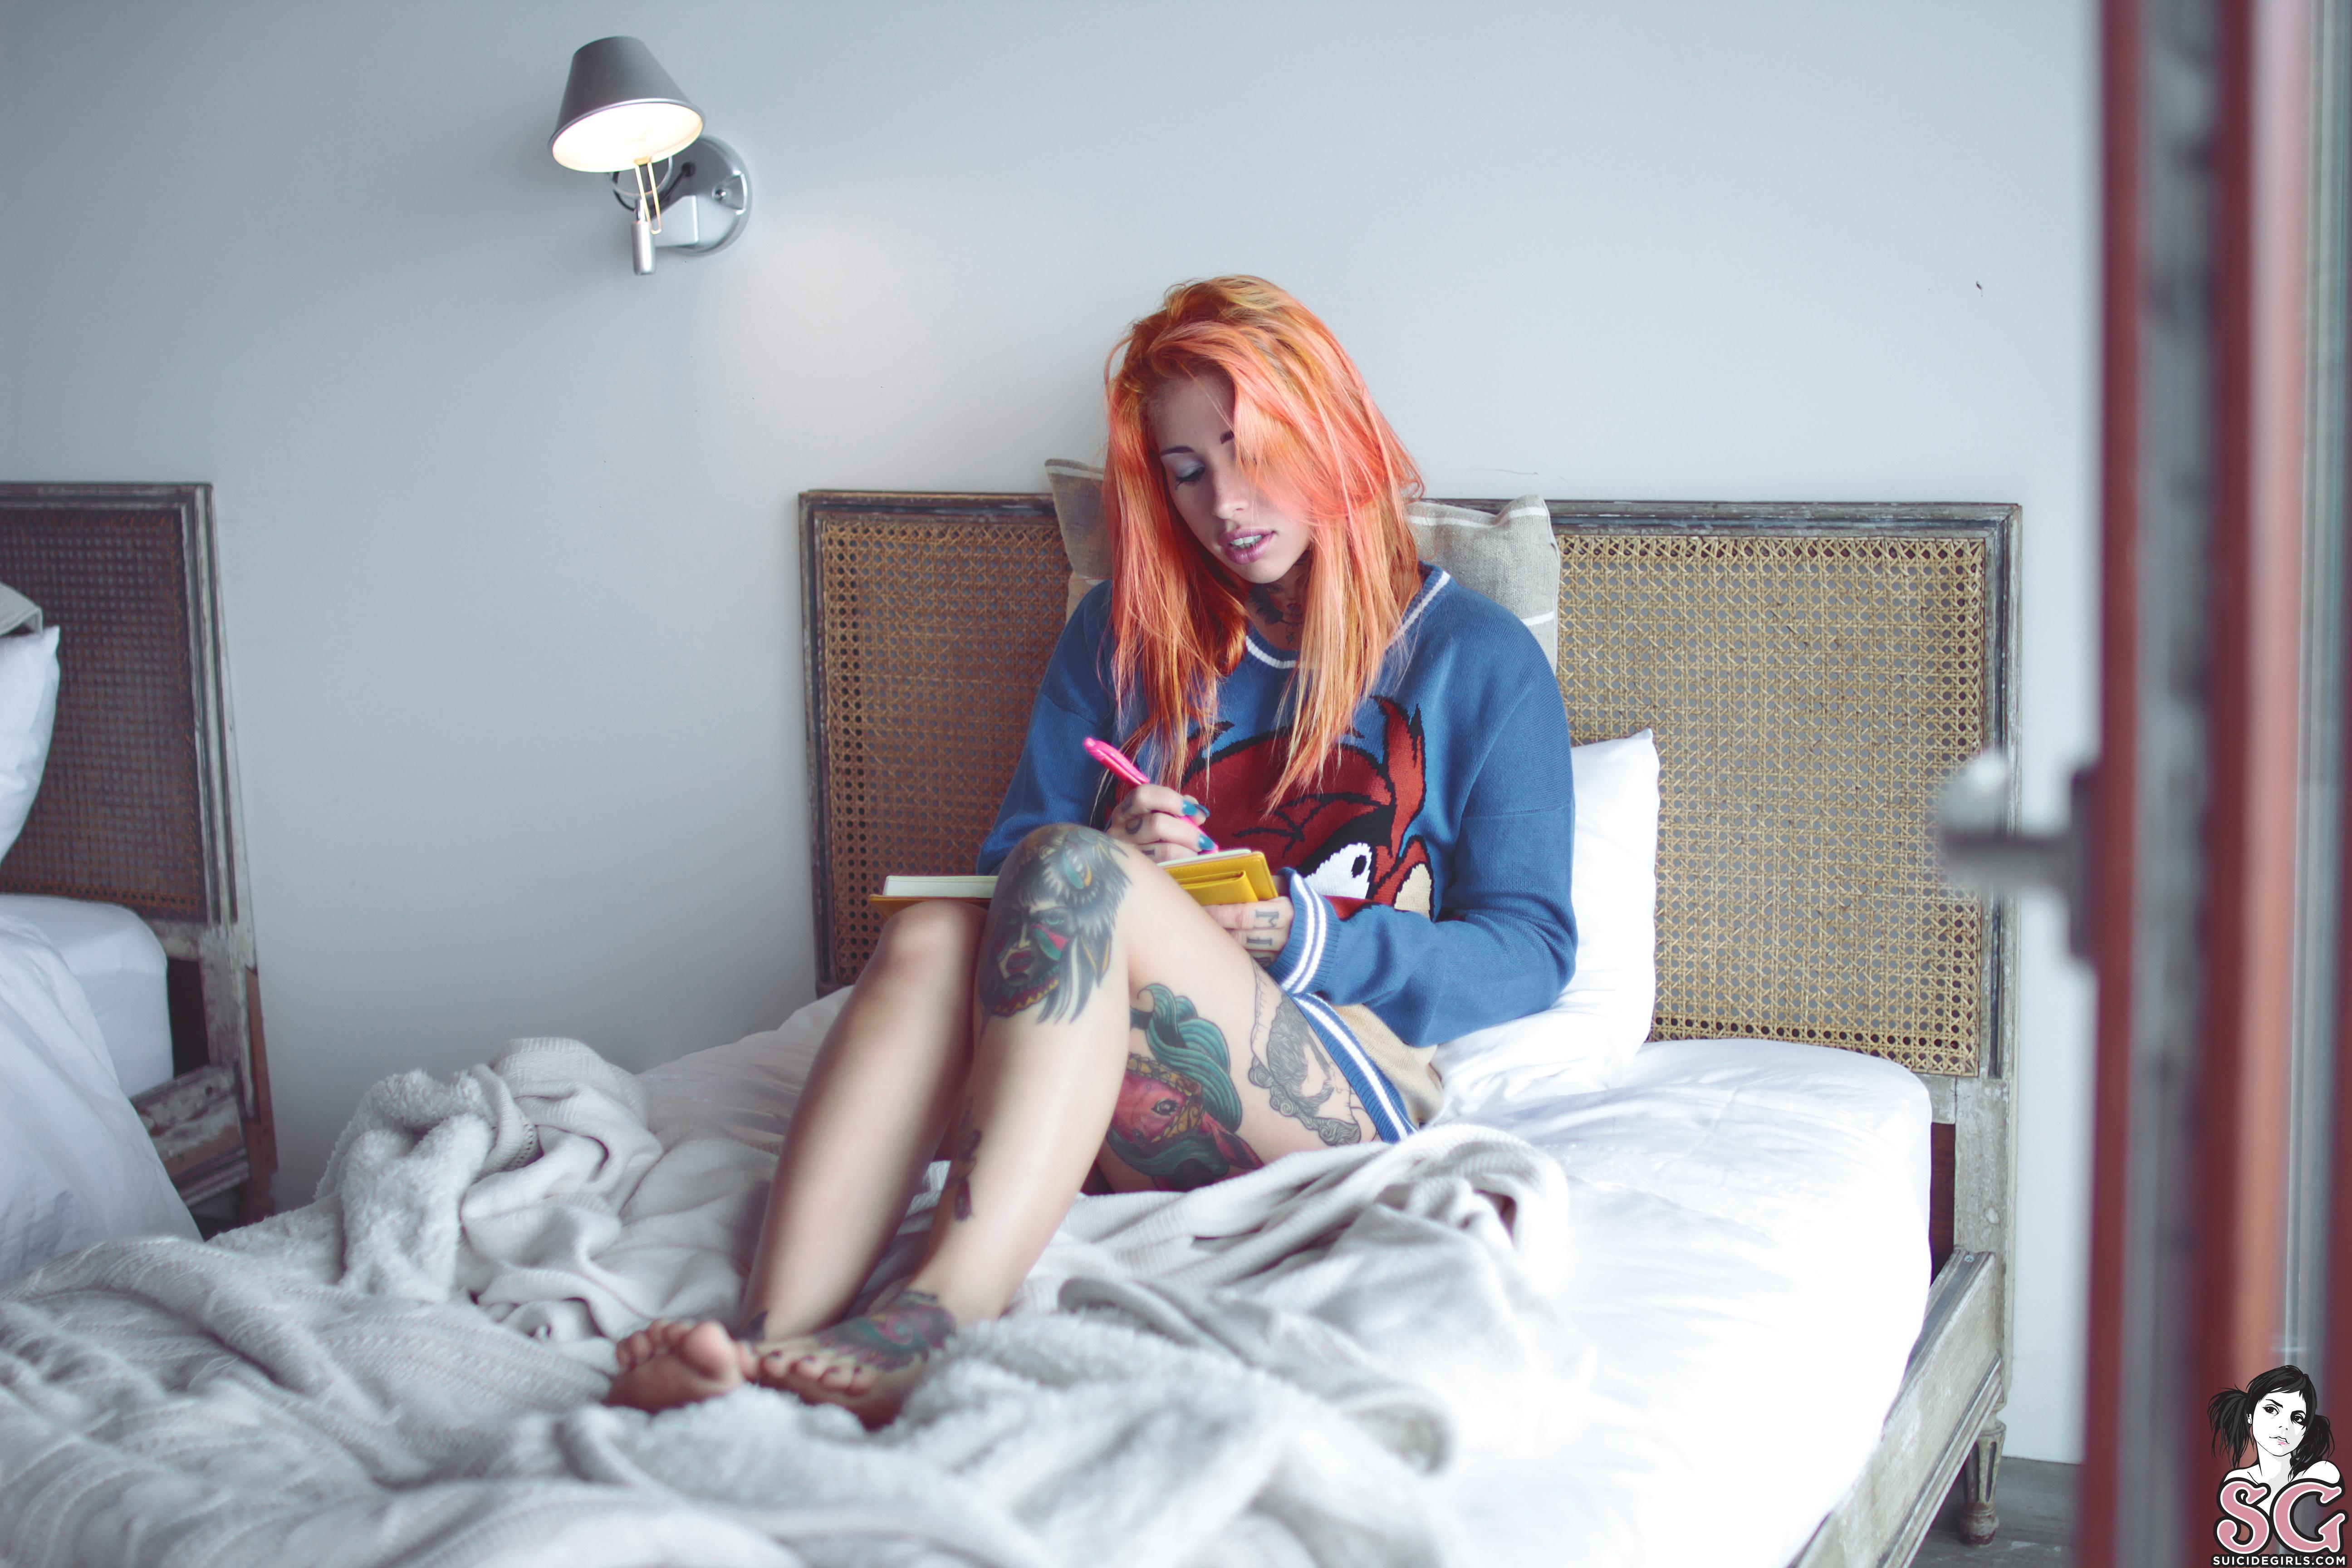 People 5184x3456 Suicide Girls redhead bed pillow towel tattoo Cartoon Suicide women